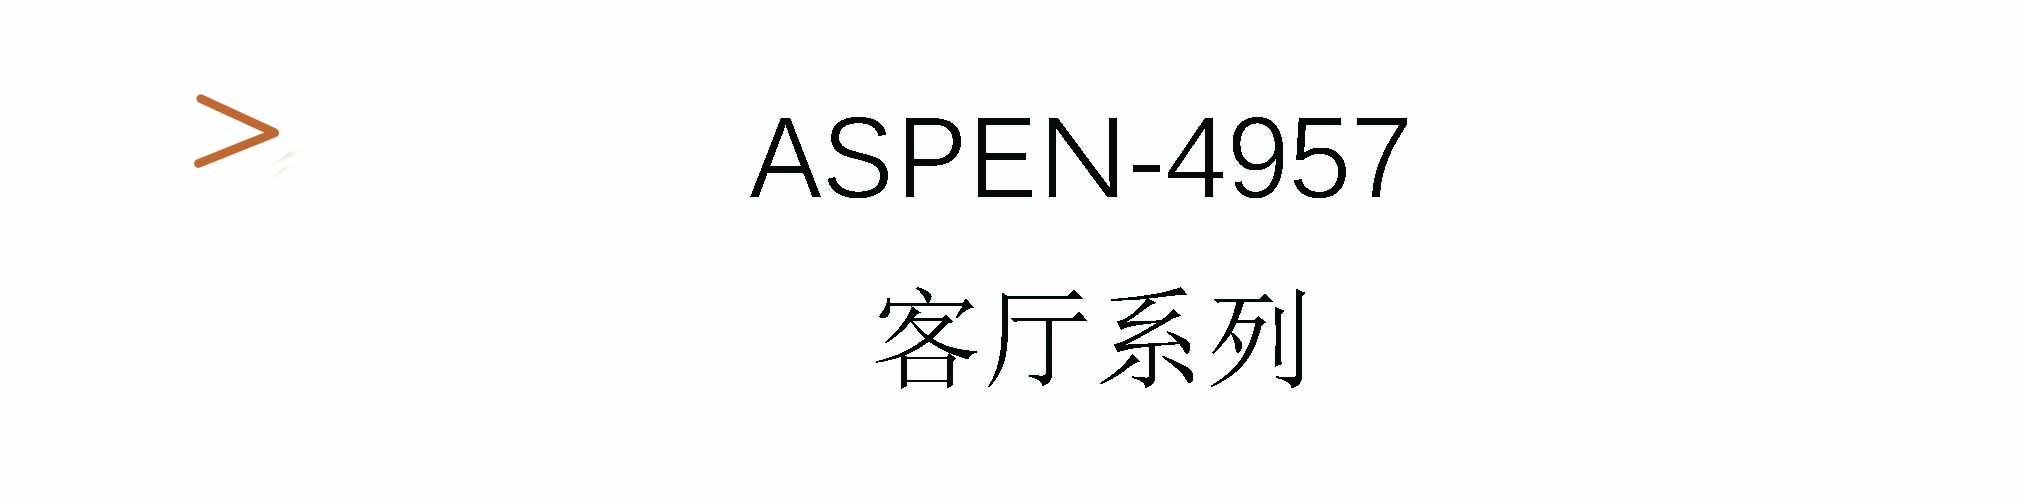 Aspen-4957